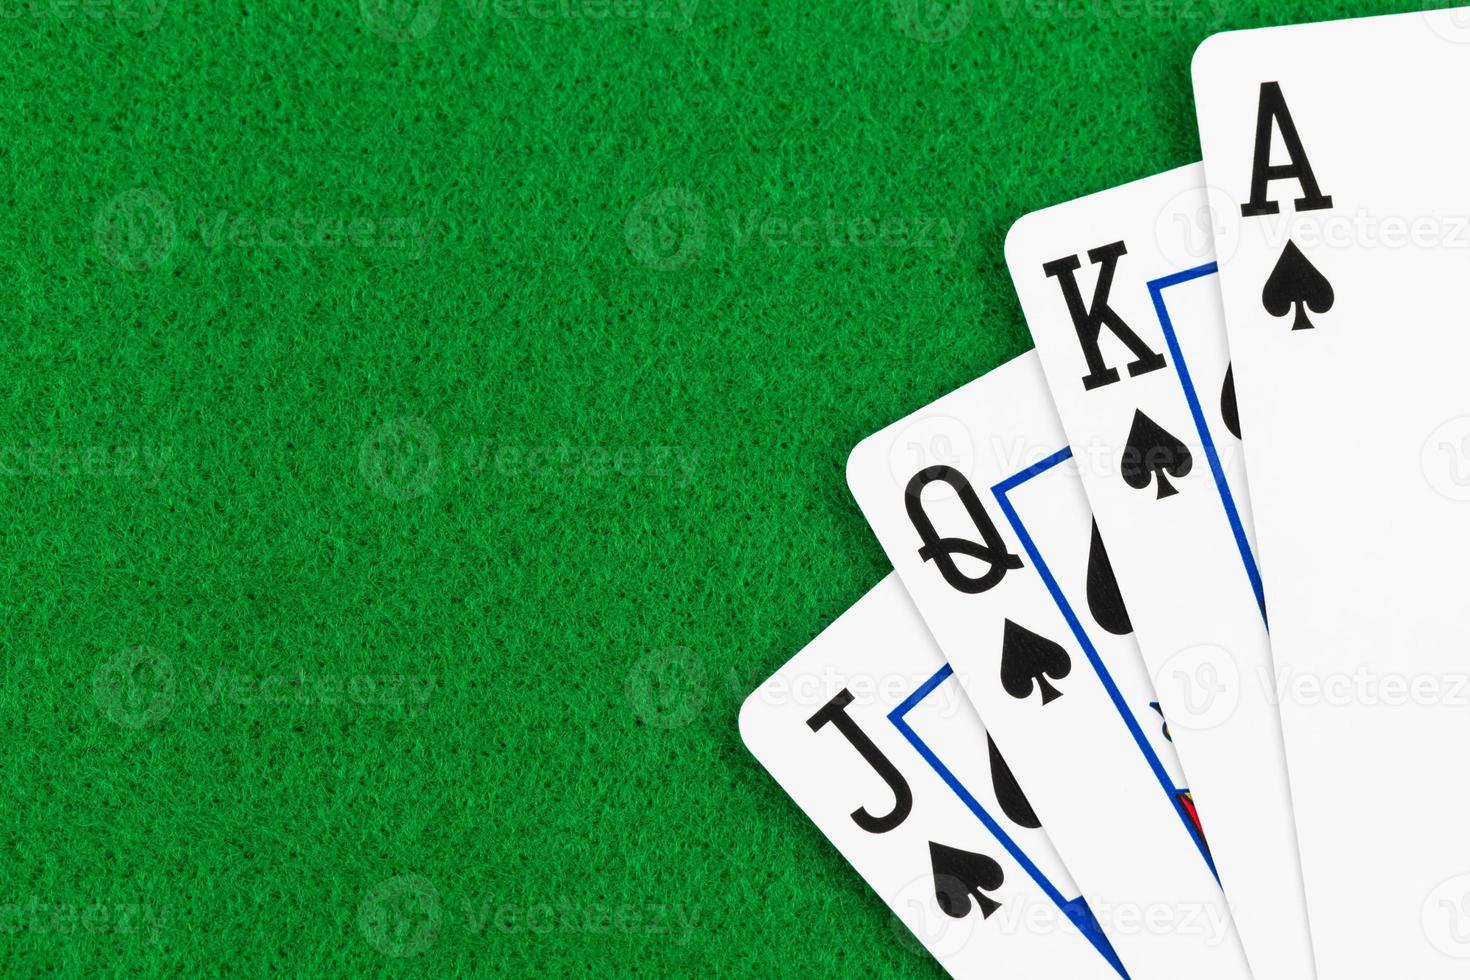 Royal flush poker playing cards on green felt background photo